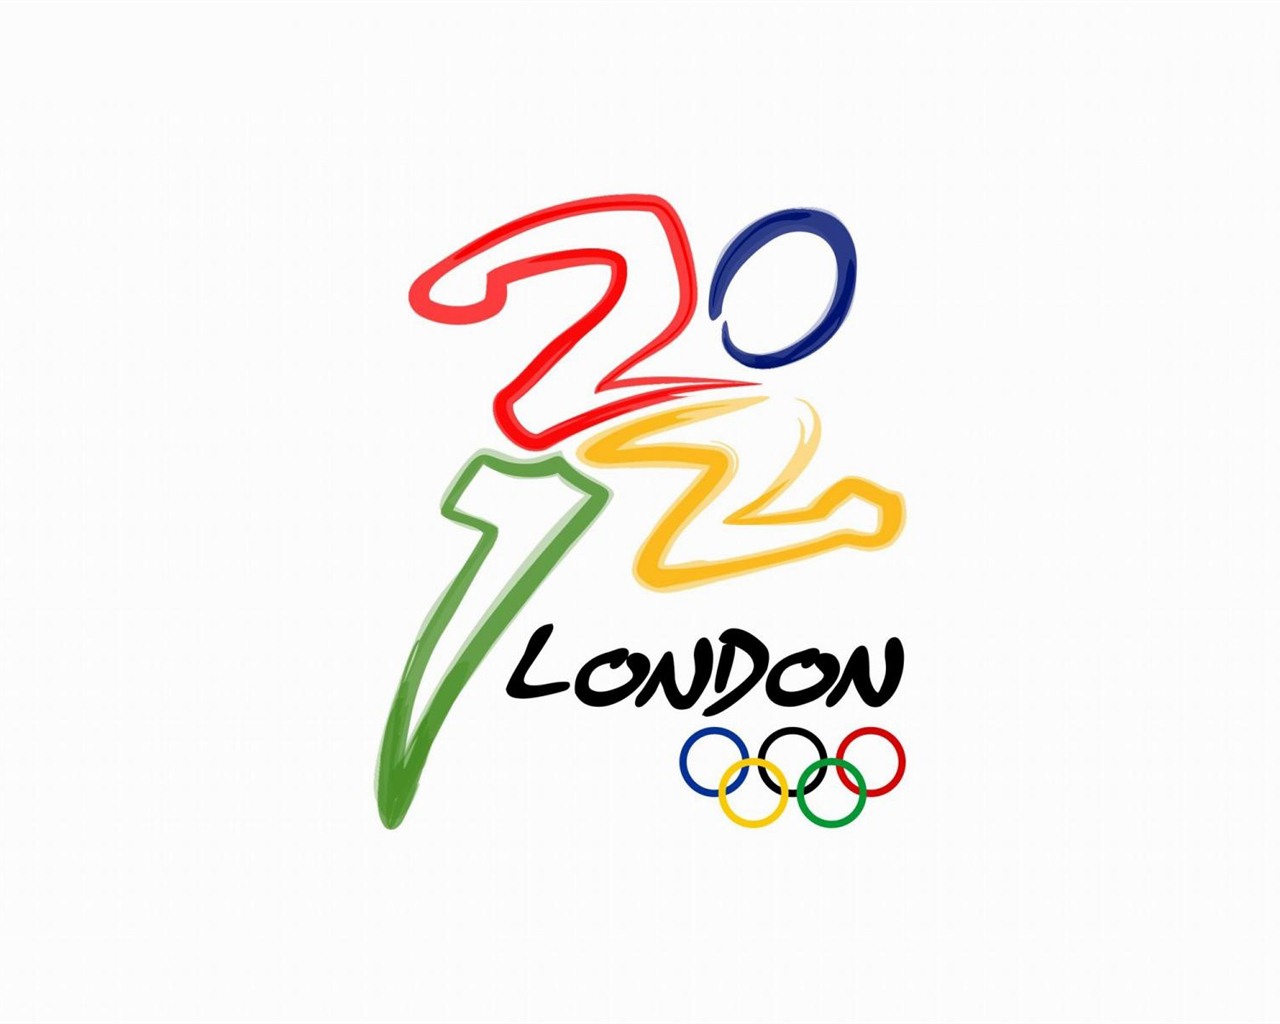 London 2012 Olympics theme wallpapers (2) #22 - 1280x1024